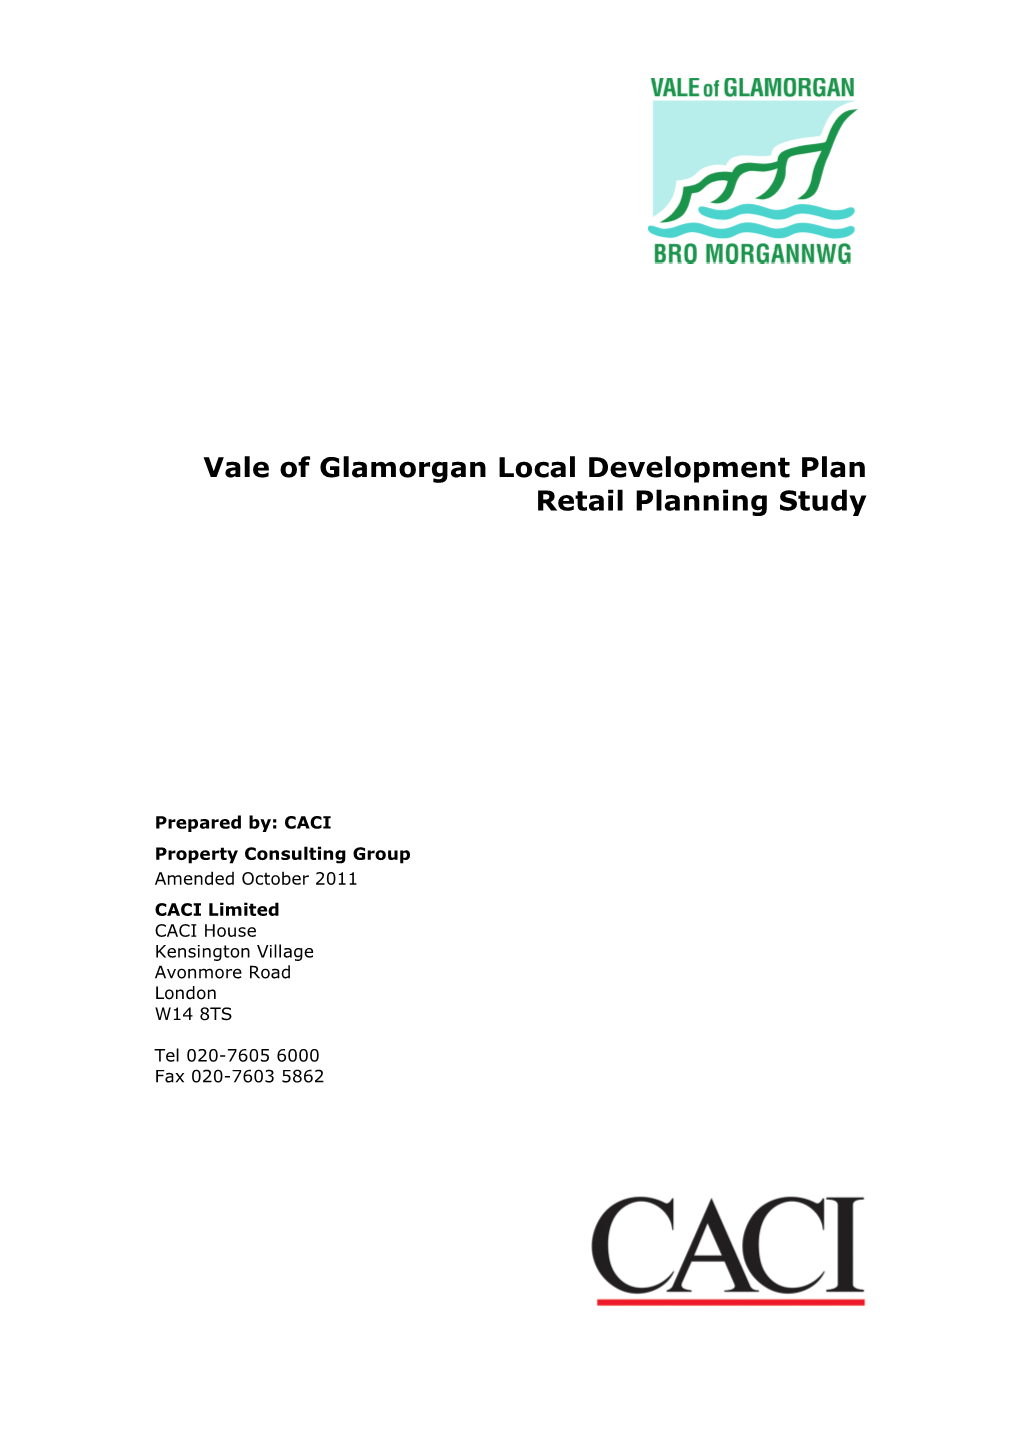 Vale of Glamorgan Local Development Plan Retail Planning Study